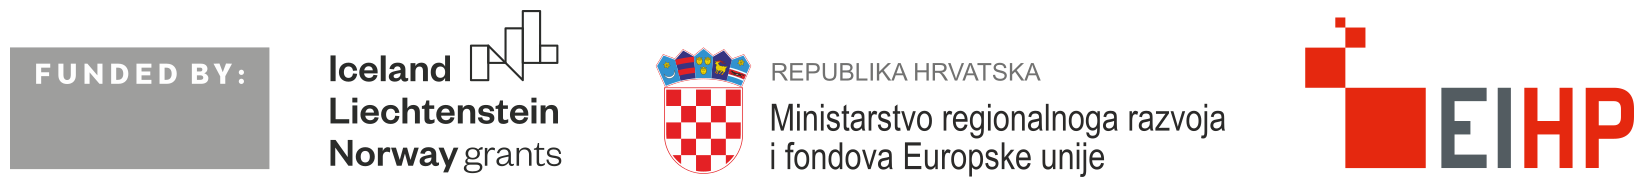 Funded by: Iceland Liechtenstein Norway grants, Ministarstvo regionalnoga razvoja i fondova Europske unije, EIHP